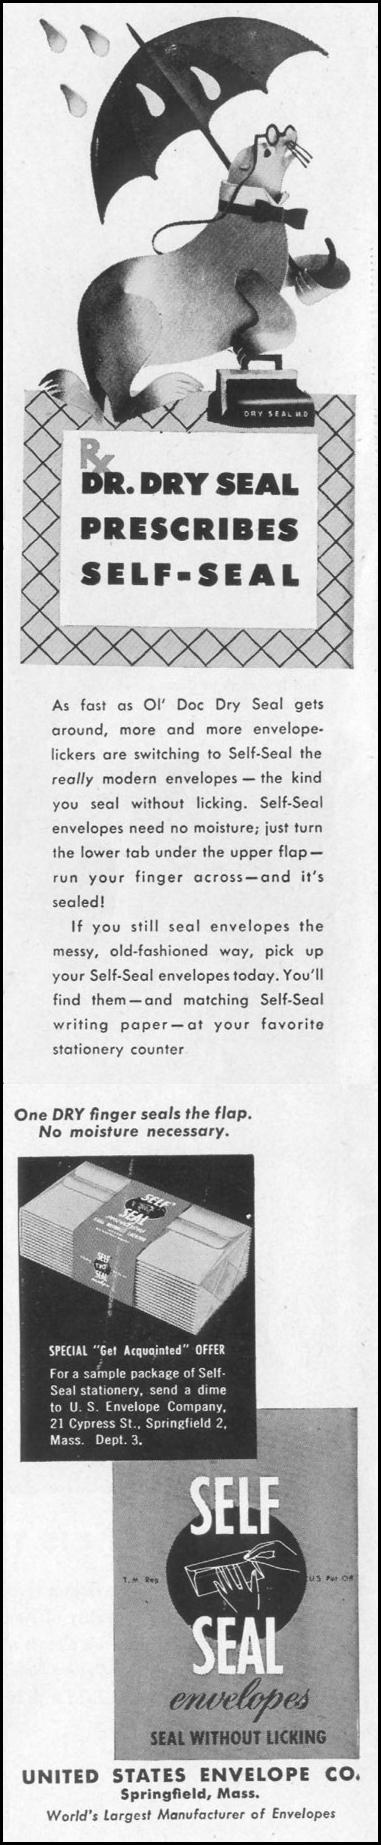 SELF-SEAL ENVELOPES
LIFE
10/11/1948
p. 26